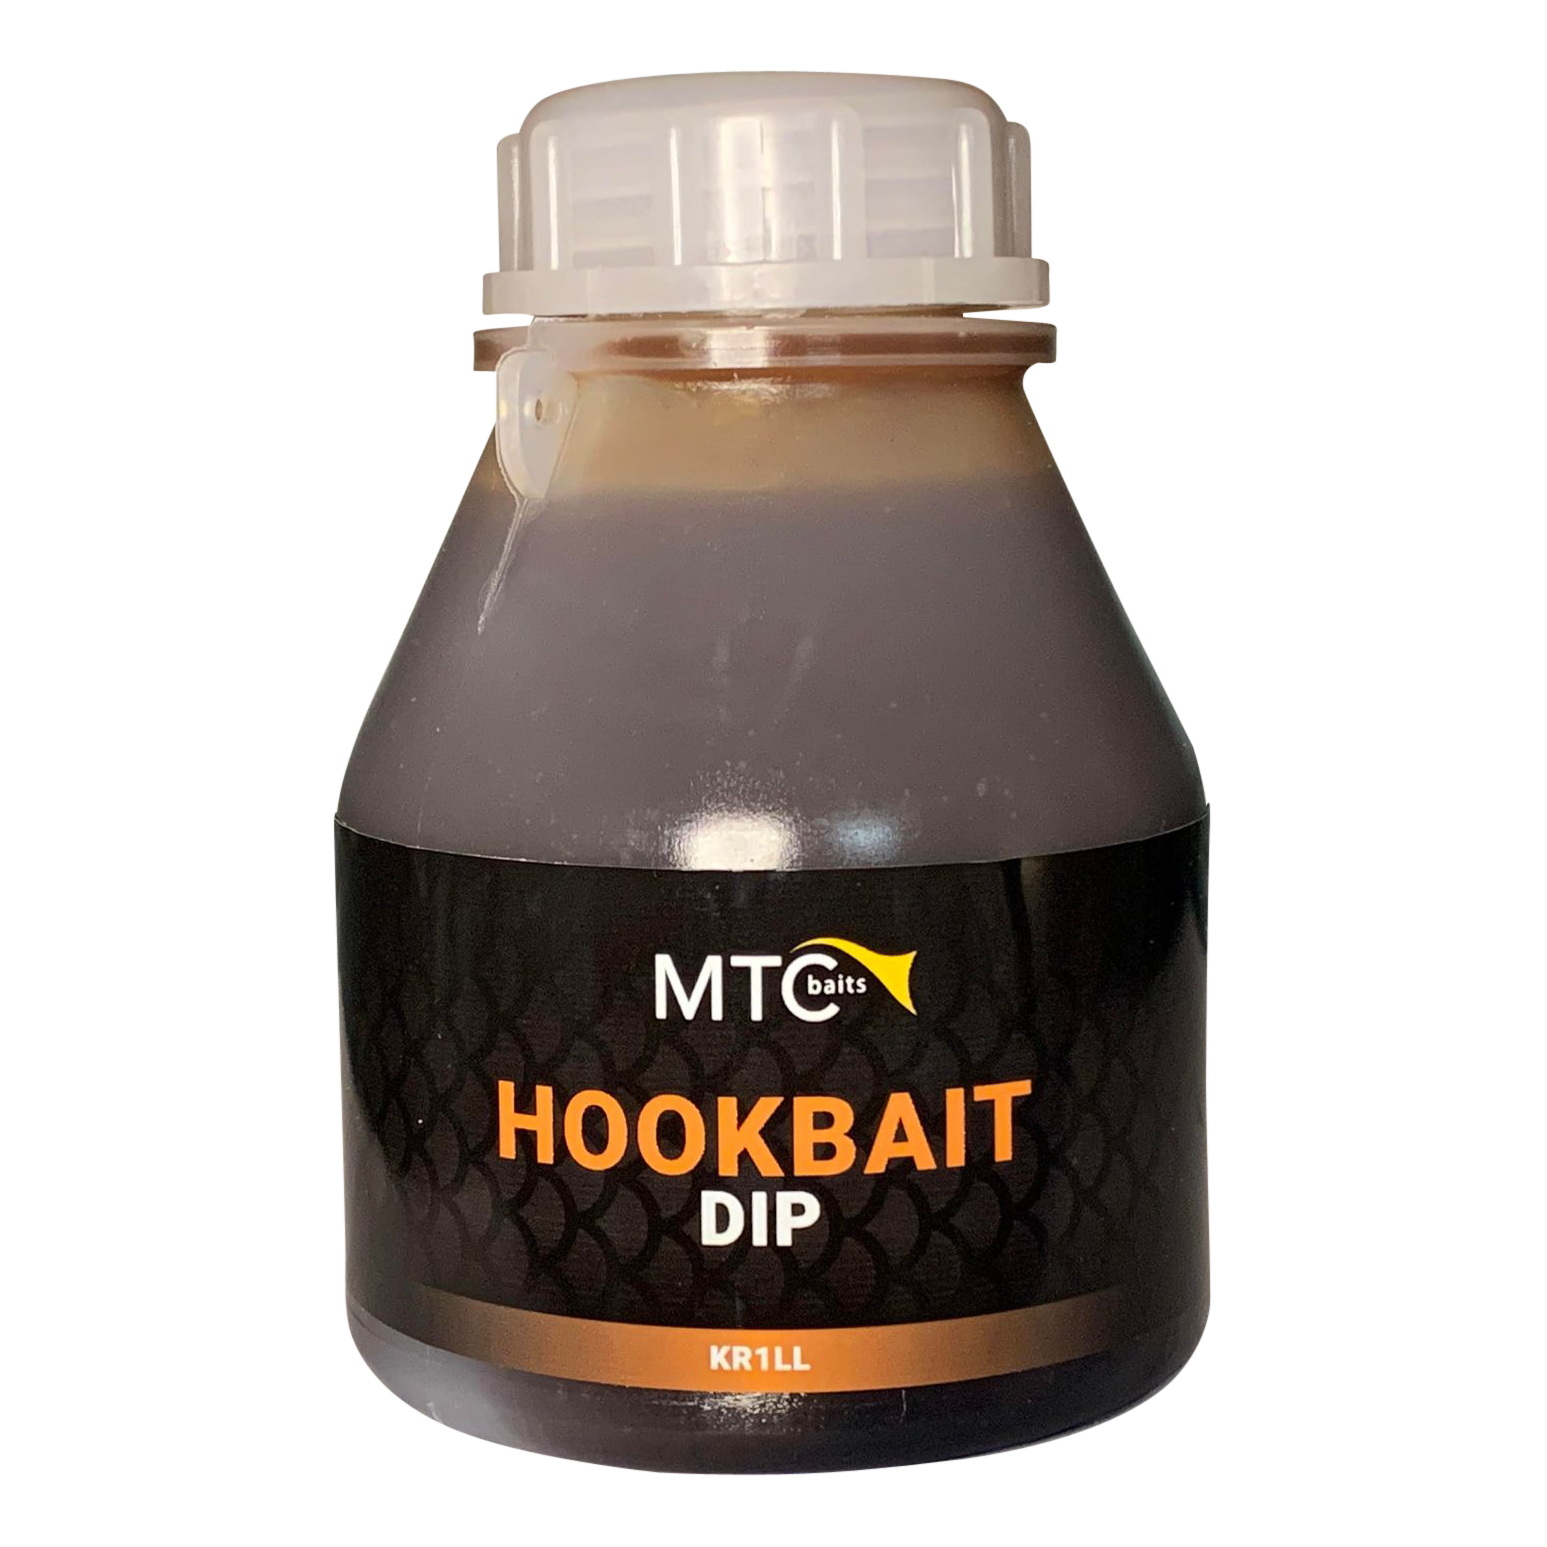 MTC Baits Hookbait Dip 250ml KR1LL